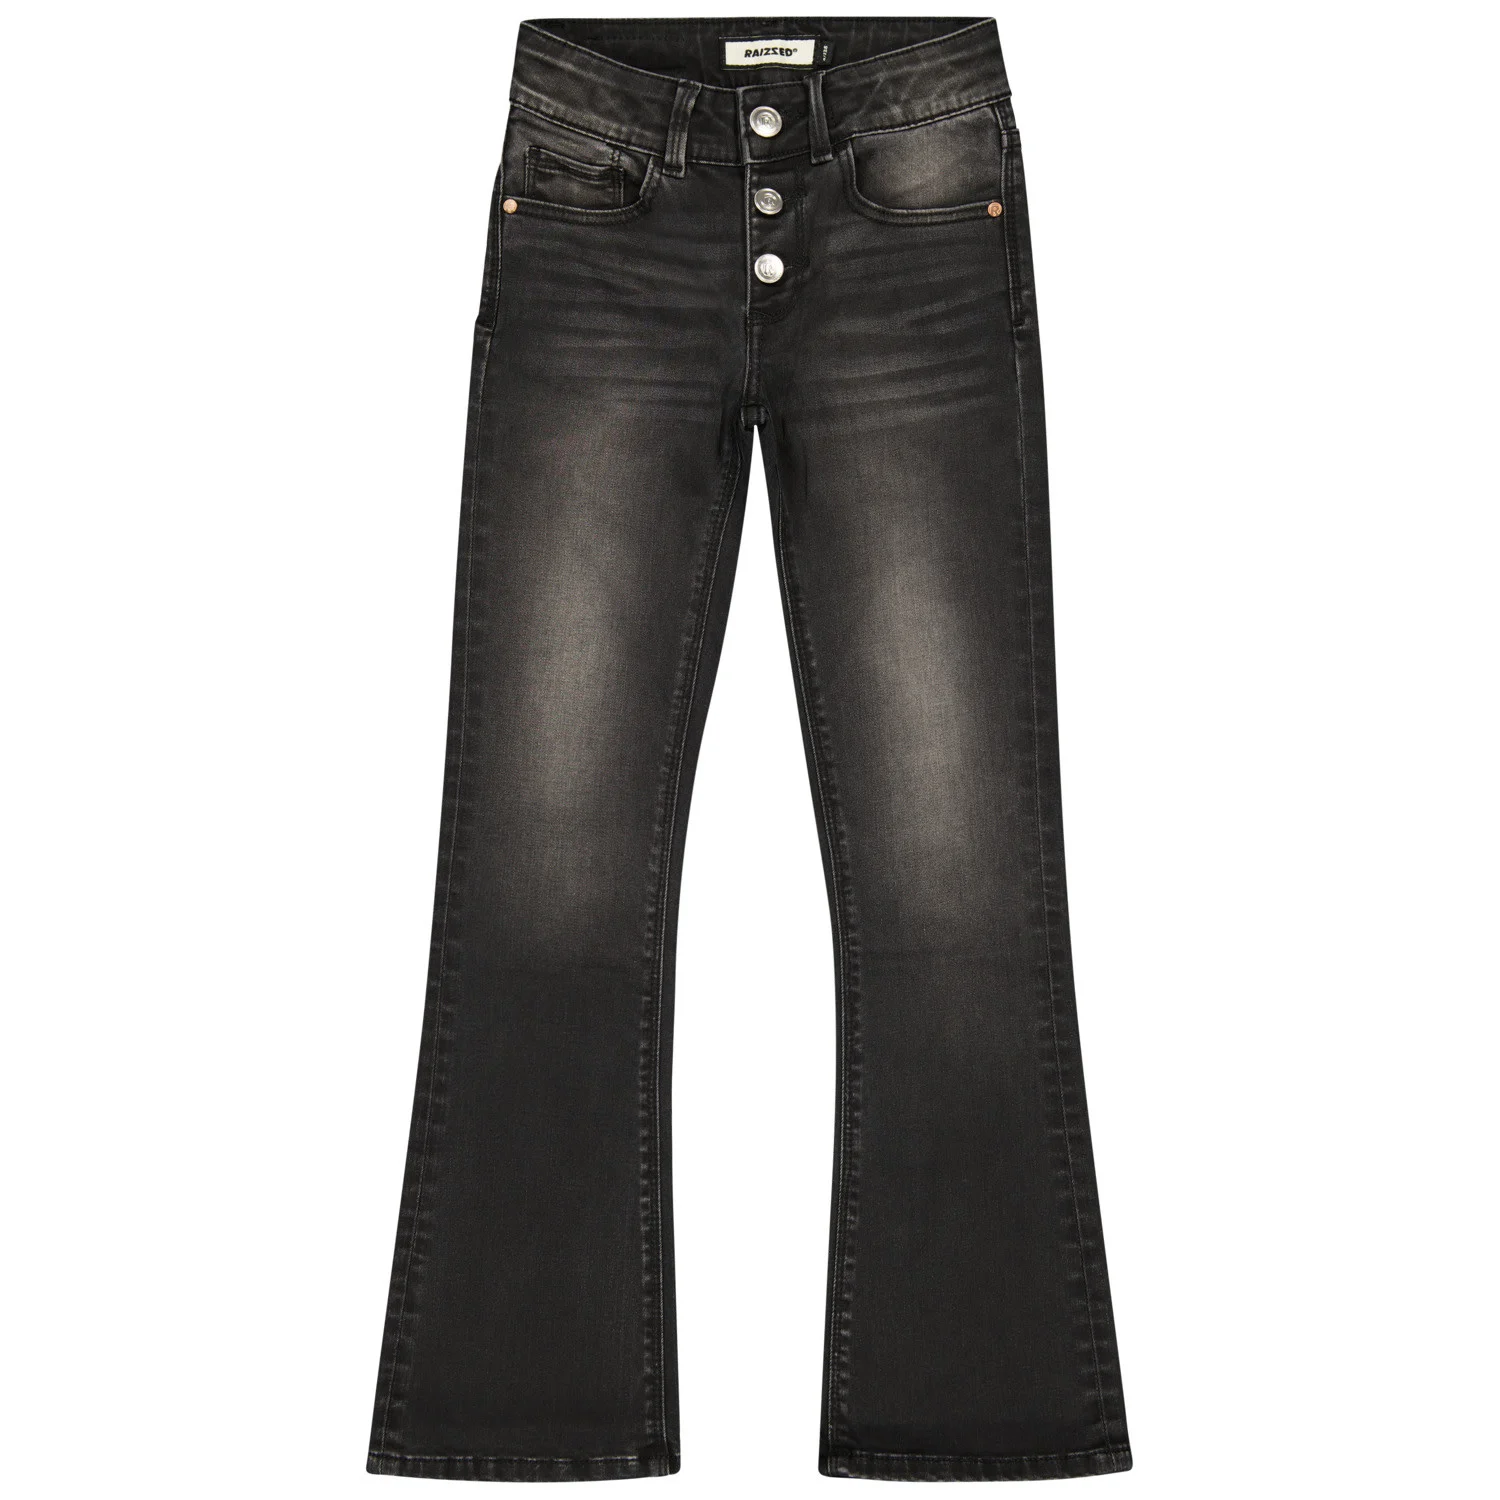 Afbeelding van Raizzed Meiden jeans flared pants melbourne black